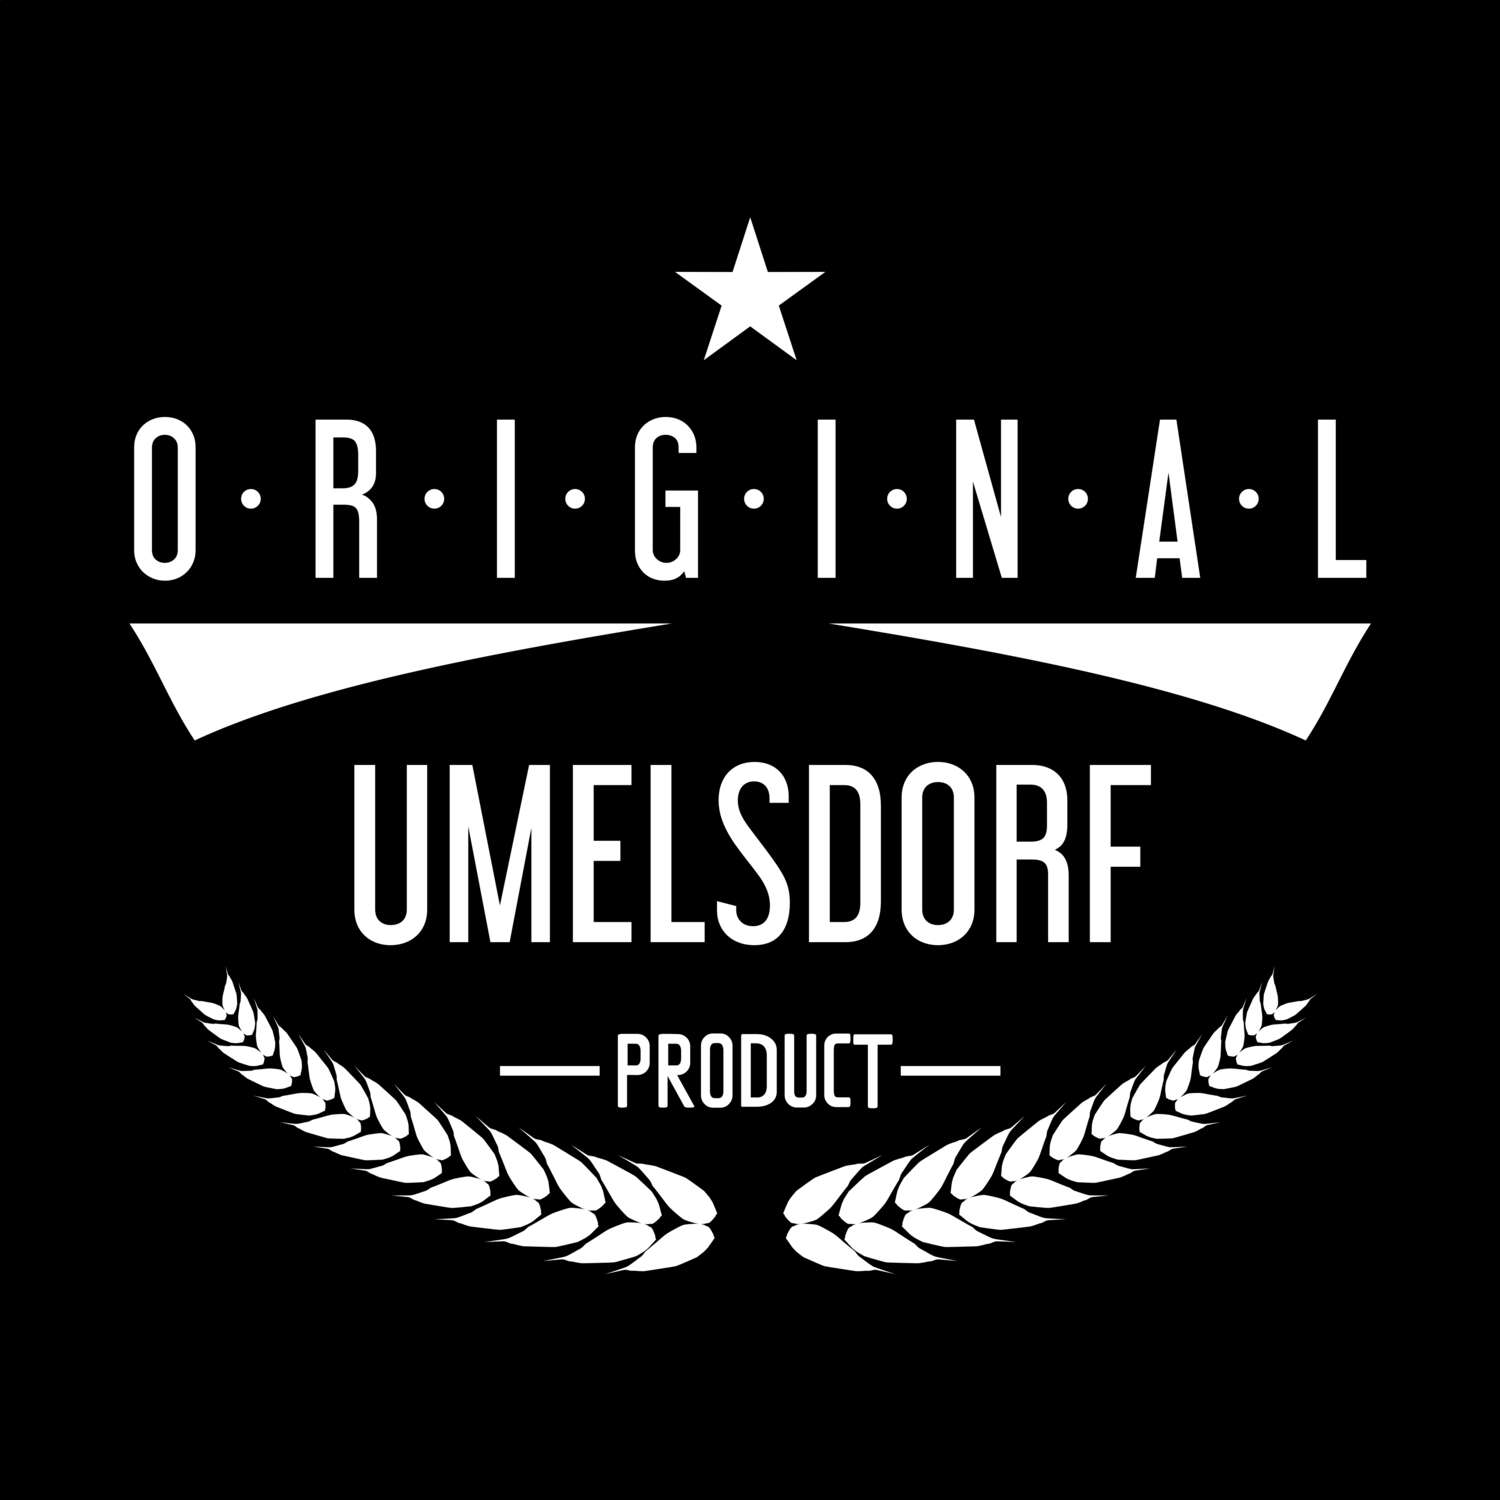 Umelsdorf T-Shirt »Original Product«